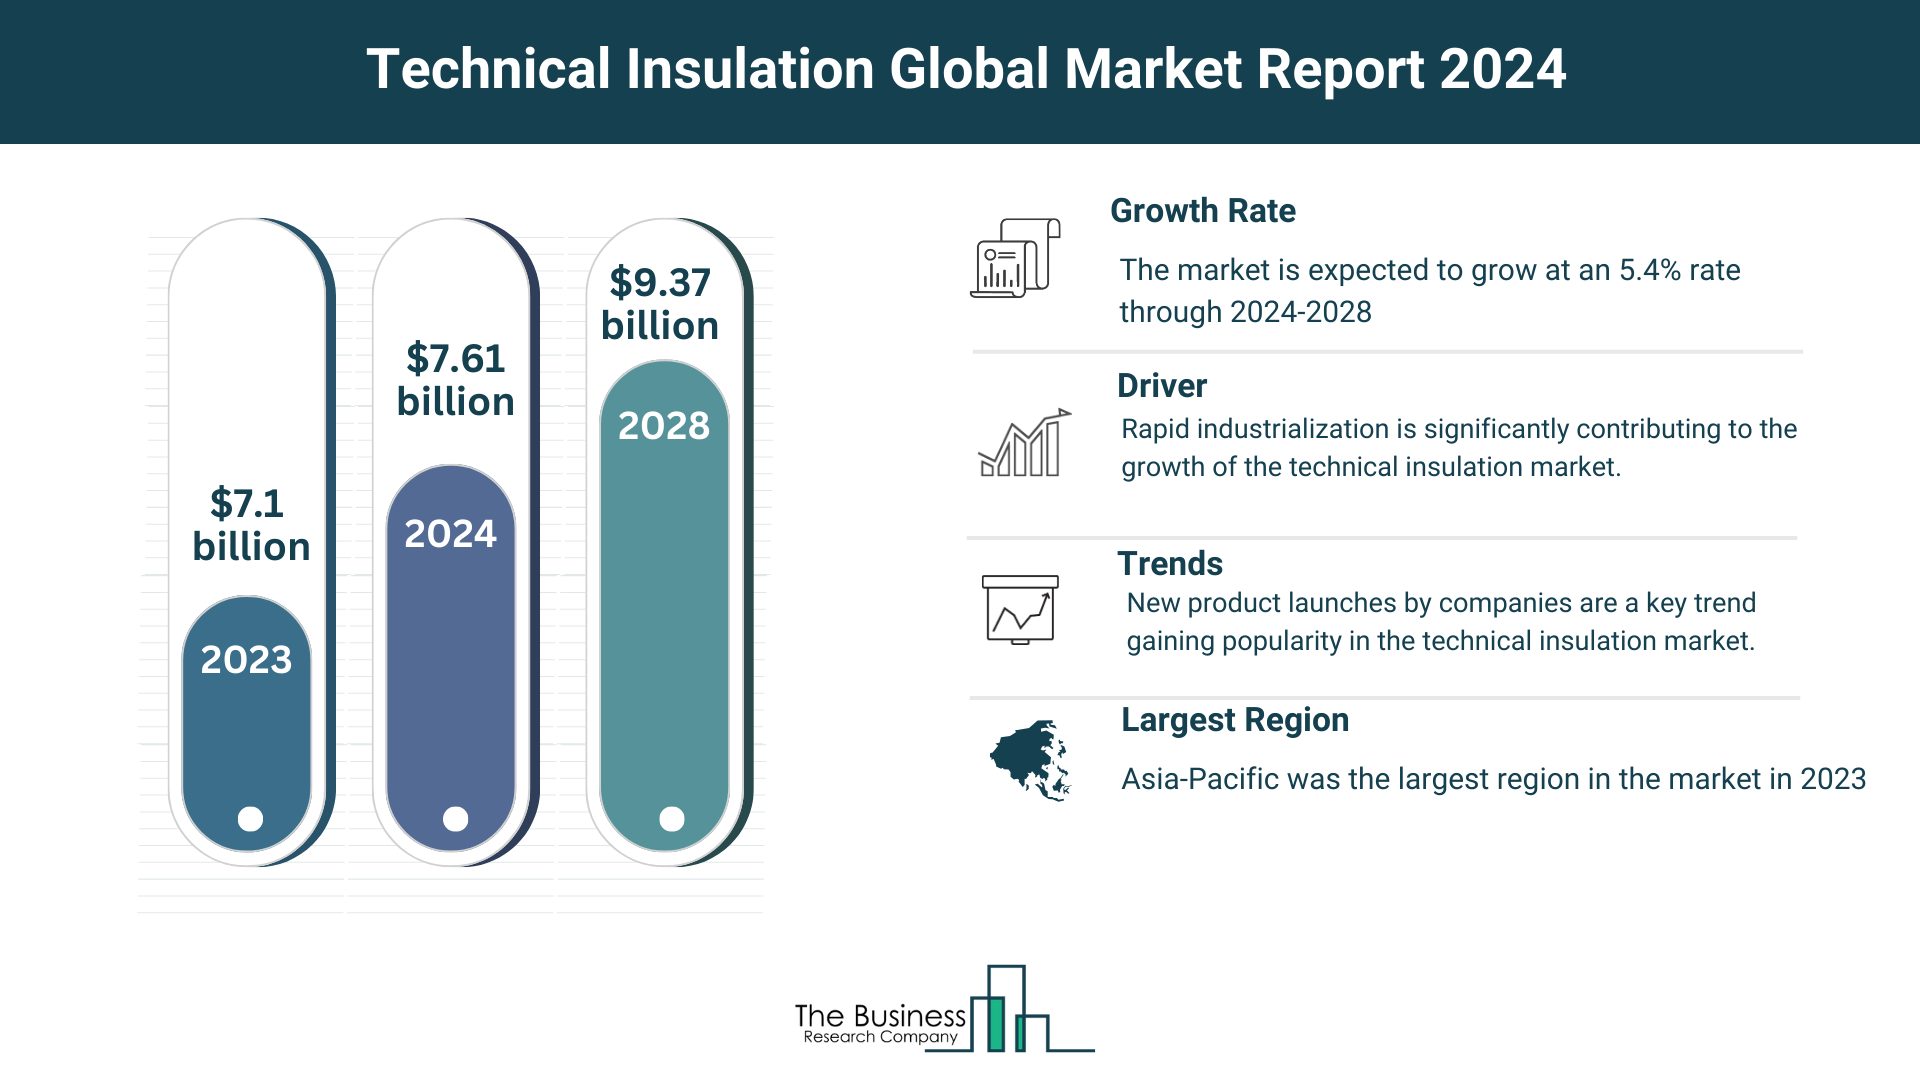 Global Technical Insulation Market